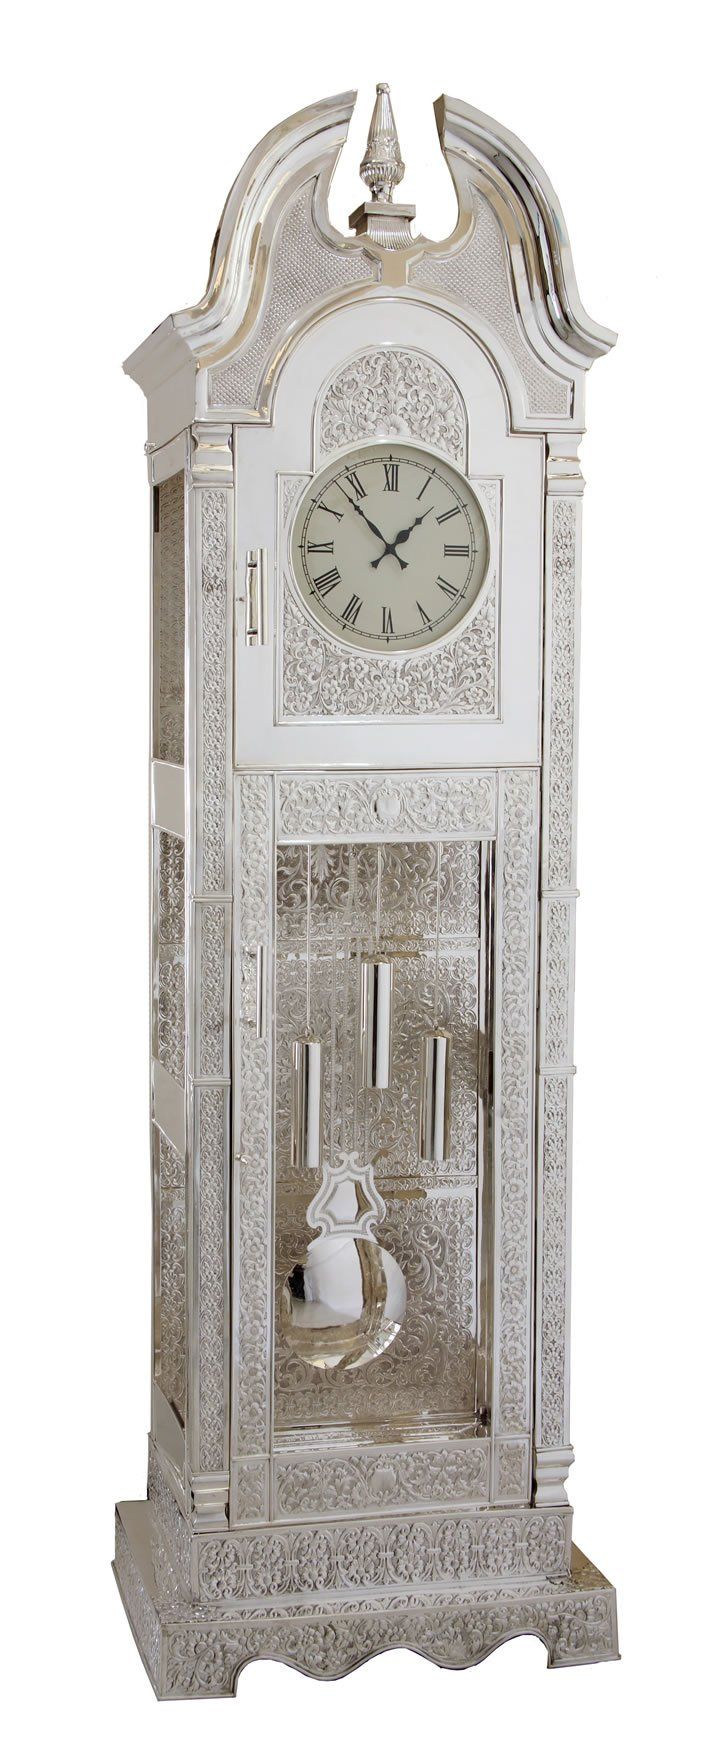  Largest Silver Clock: Sukra Jevellery sets world record
